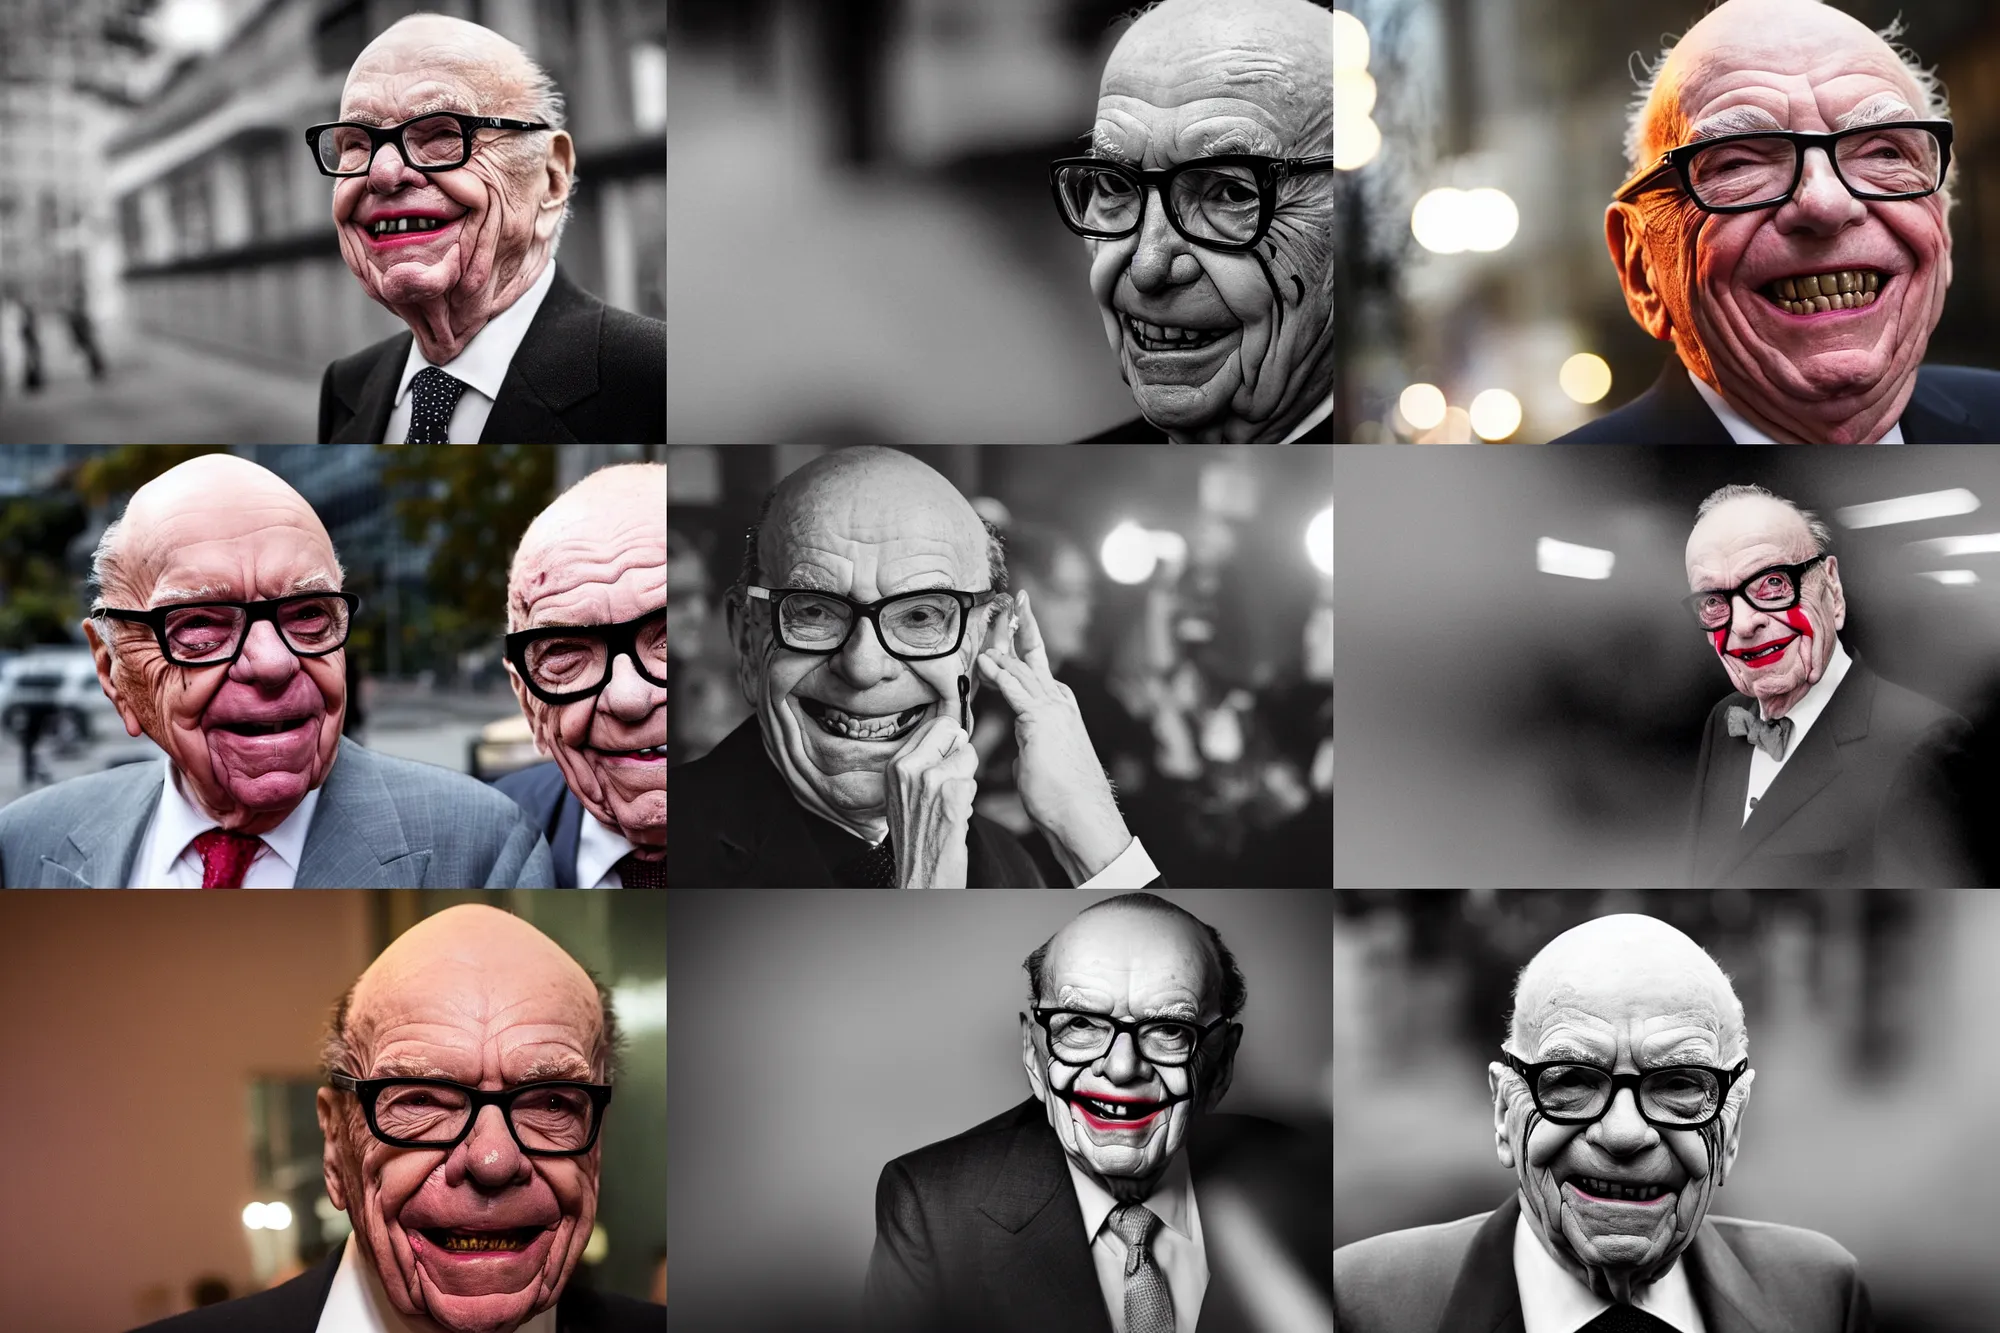 Prompt: Rupert Murdoch wearing glasses and makeup like Jack Nicholson\'s Joker, laughing as the world behind him burns, volumetric fog, portrait photography, depth of field, bokeh